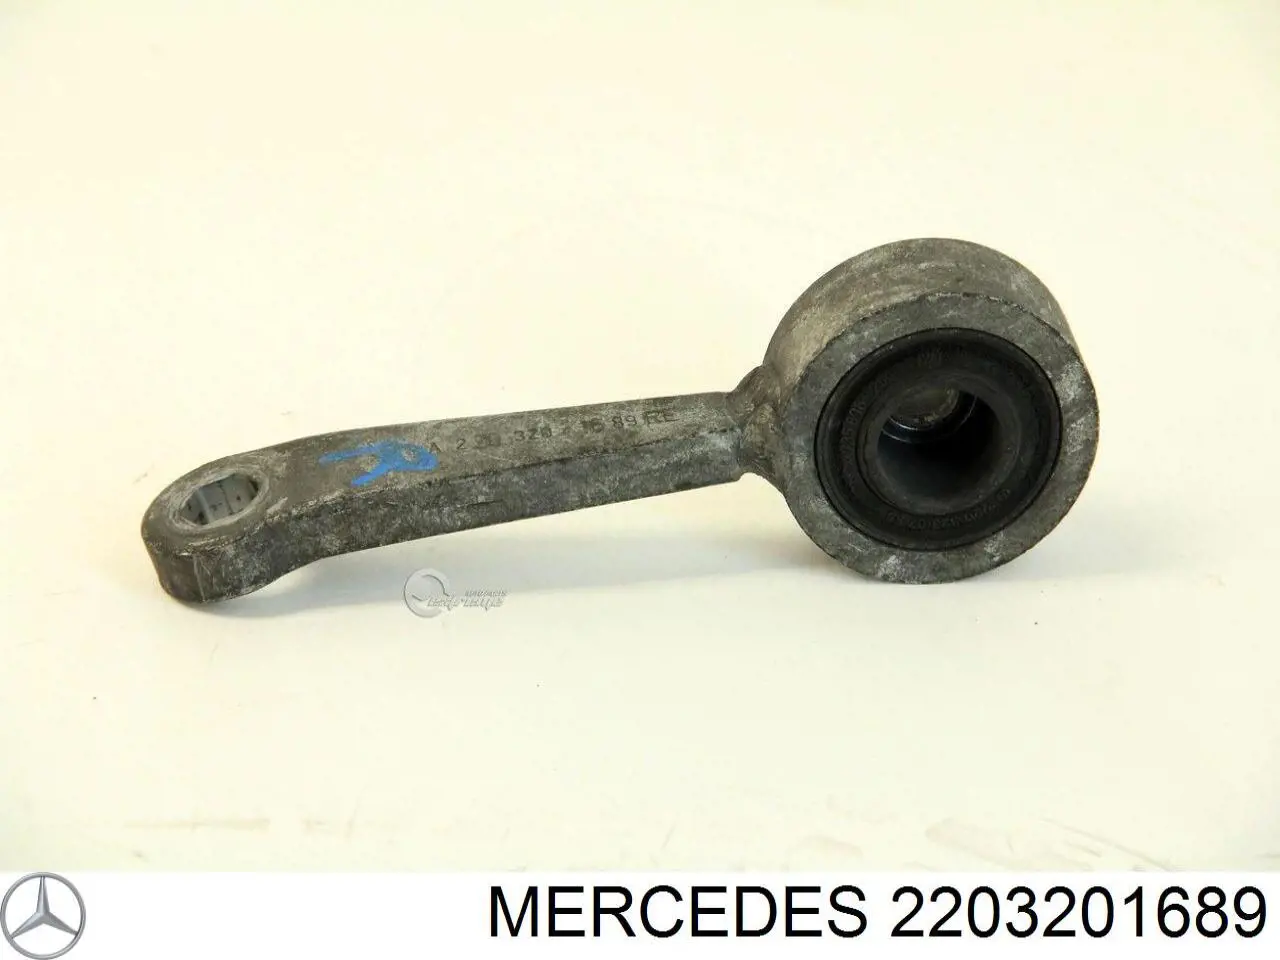 2203201689 Mercedes стойка стабилизатора переднего левая